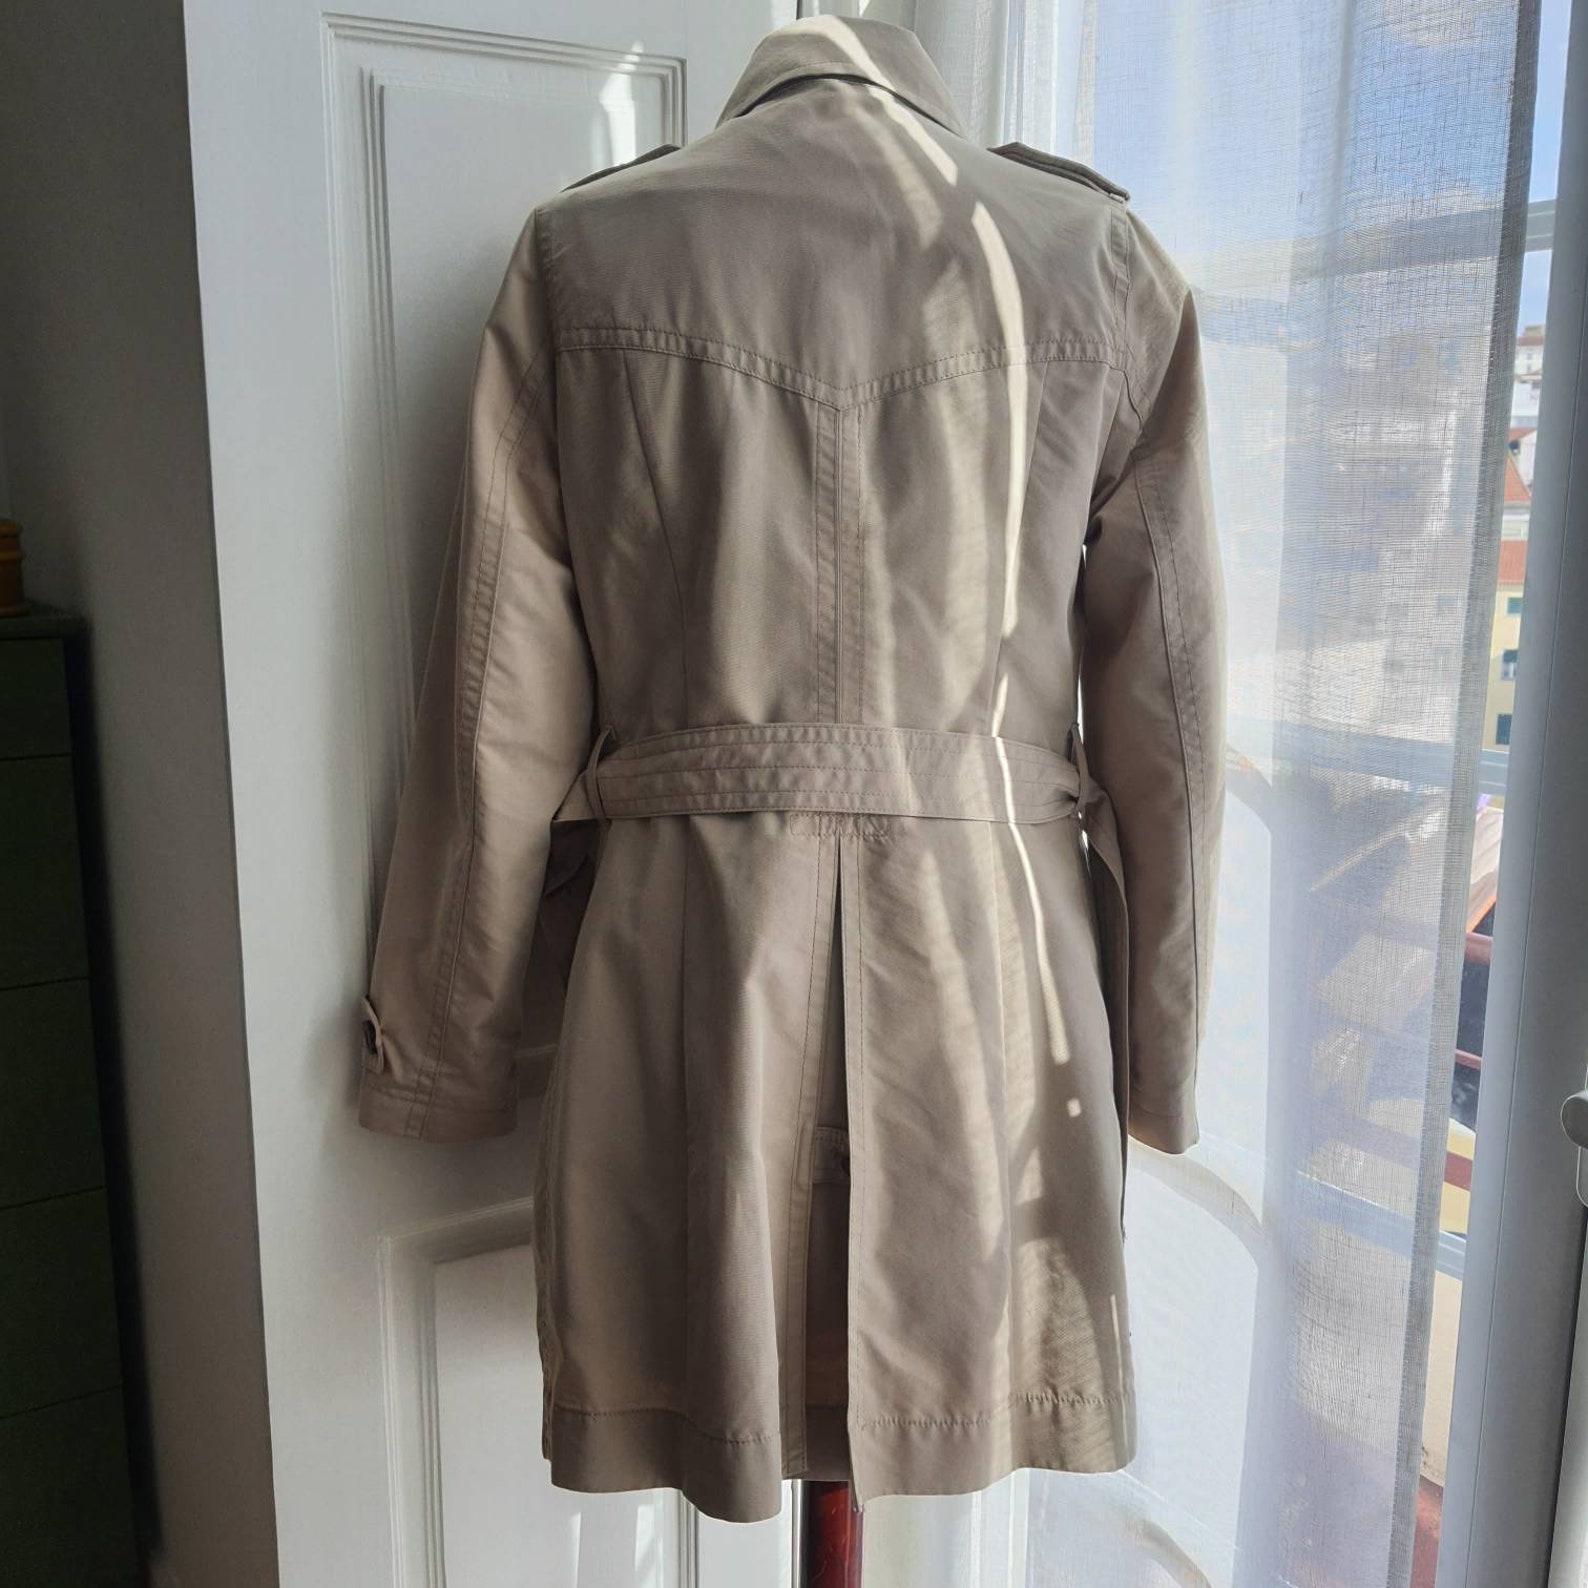 Woman classic elegant beige raincoat jacket coat | Etsy